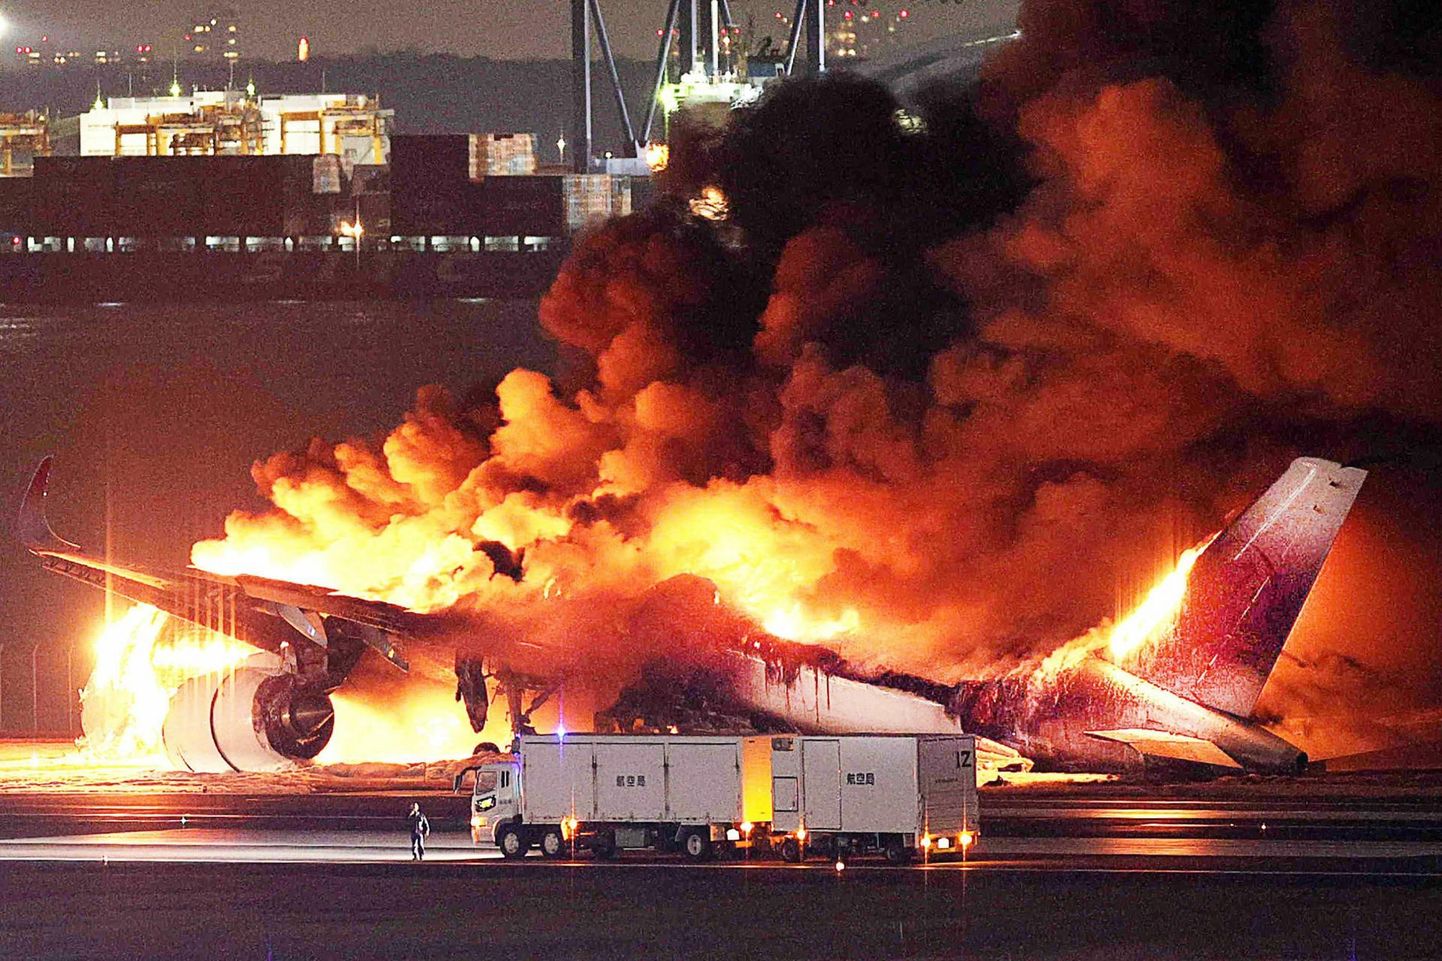 Tokyo Haneda lennujaamas põles eile lahtise leegiga Japan Airlinesi reisilennuk.